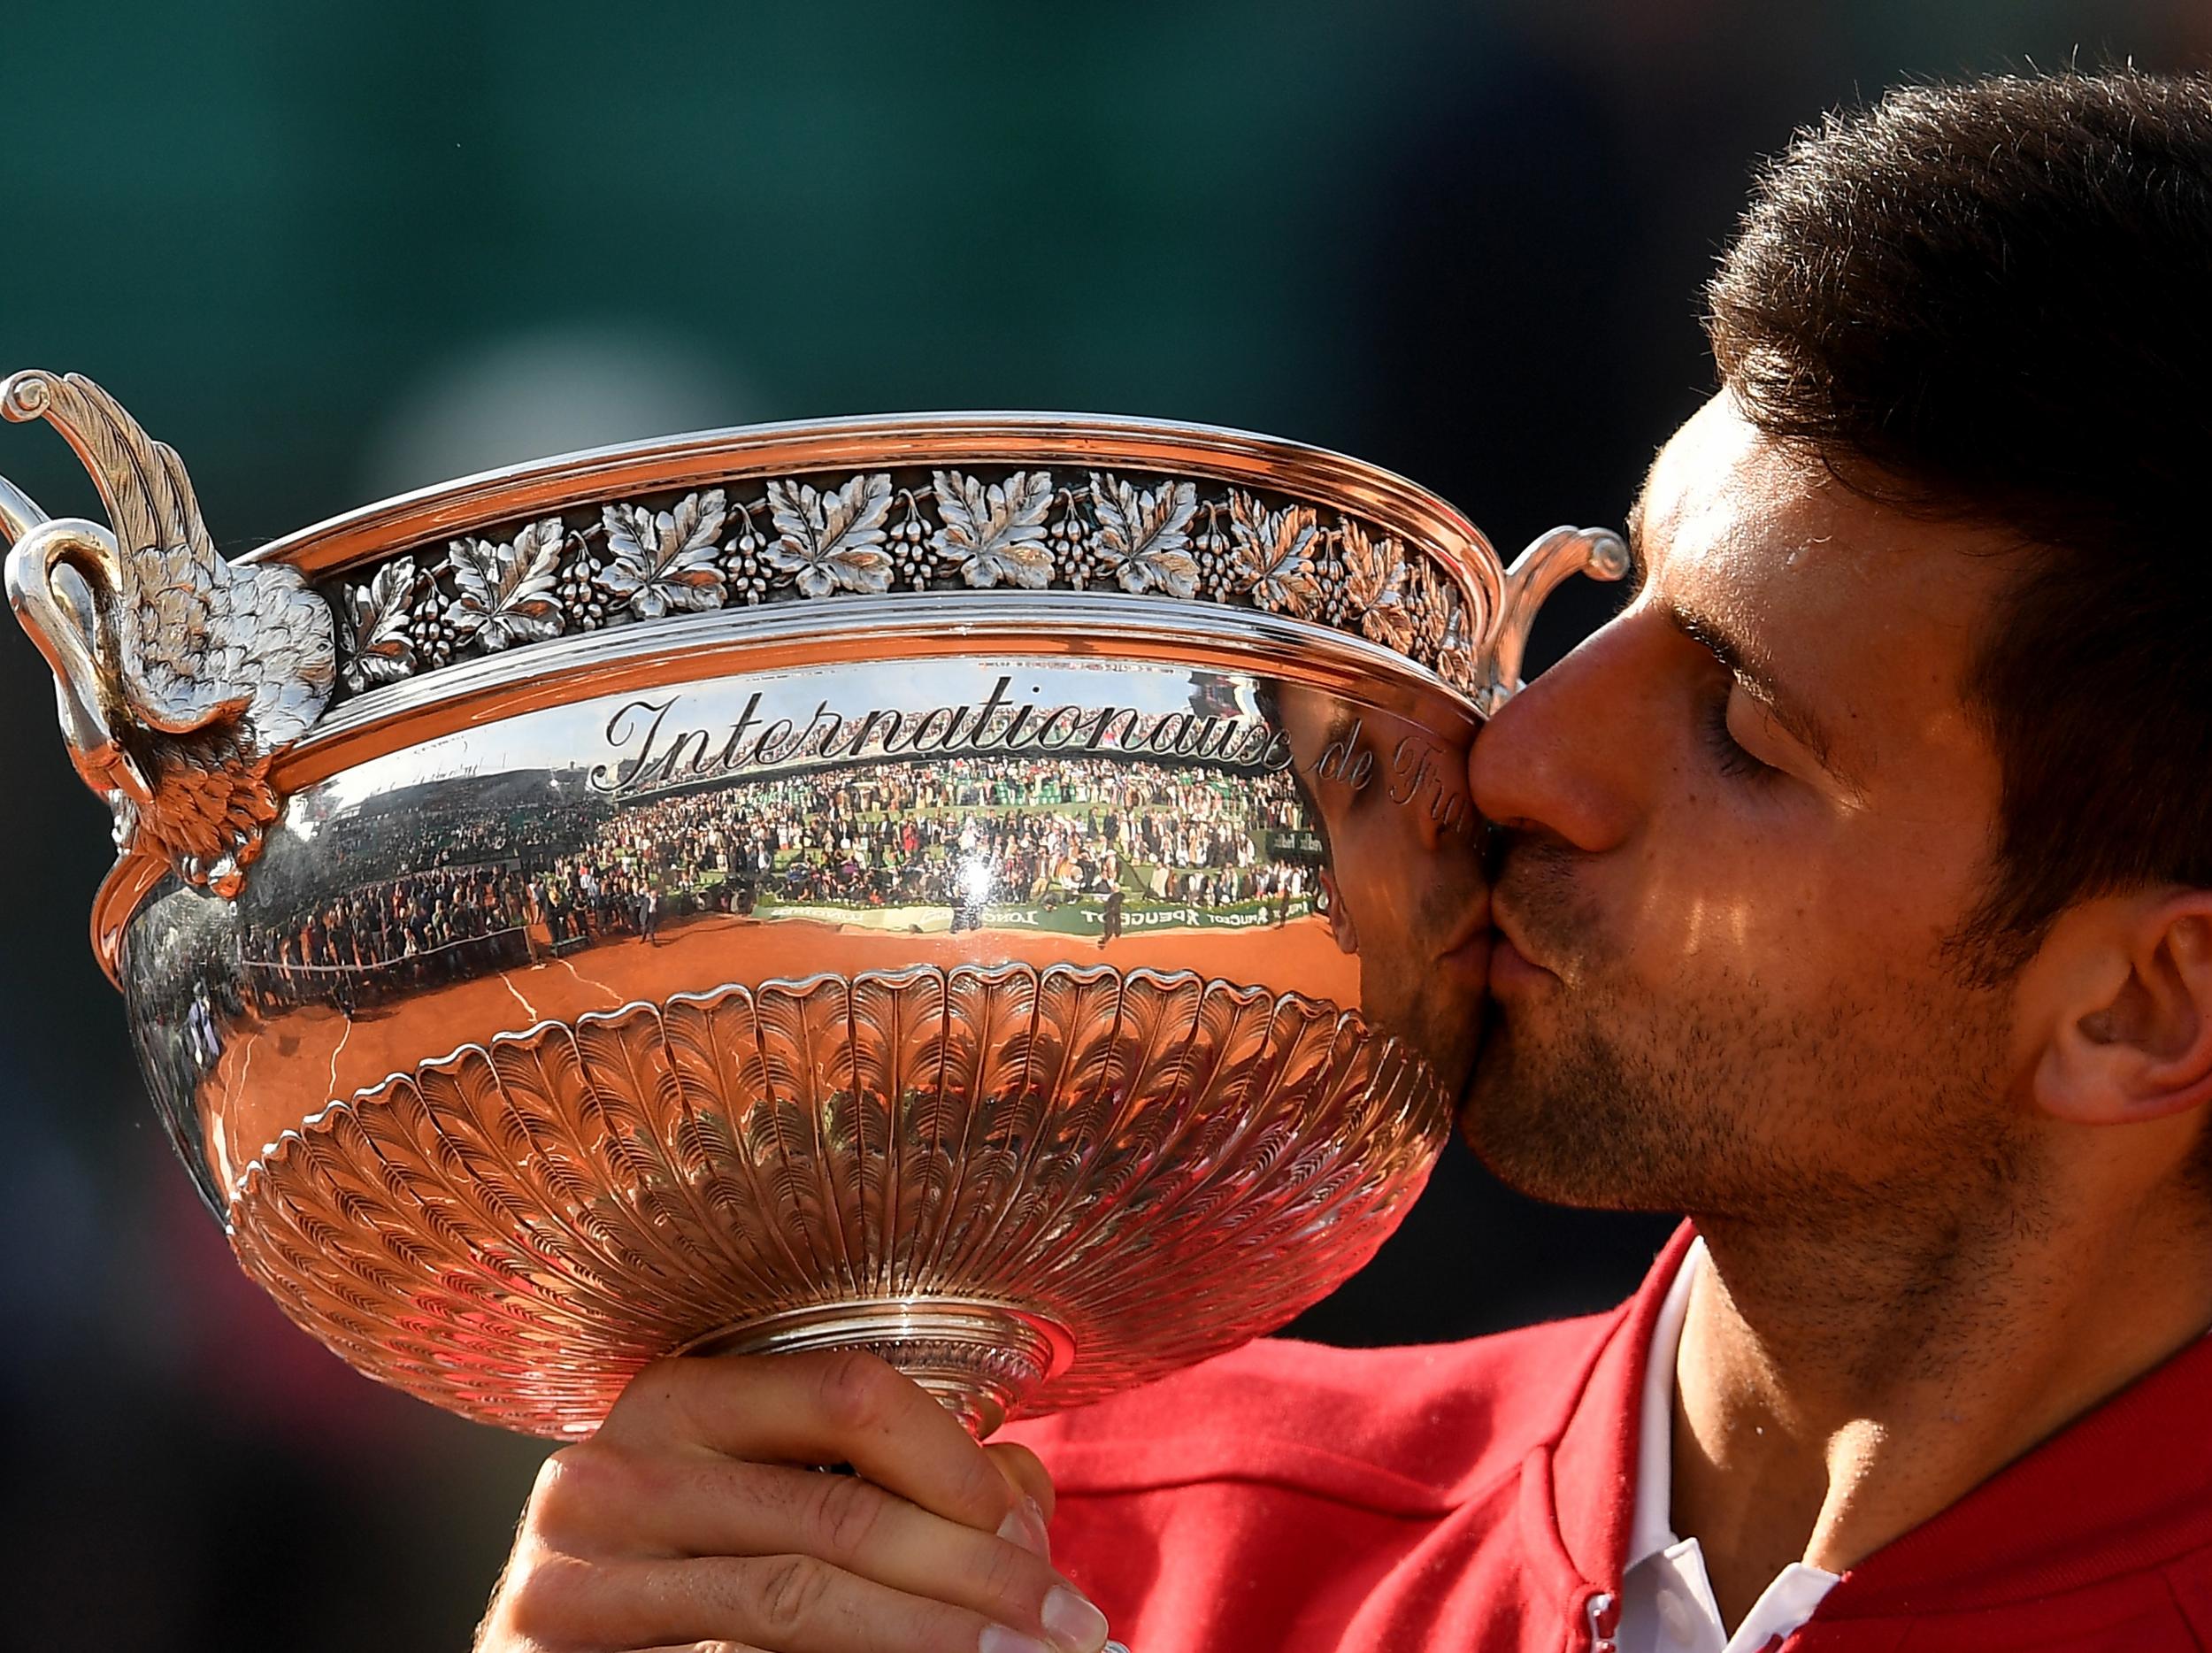 Djokovic won the French Open last year